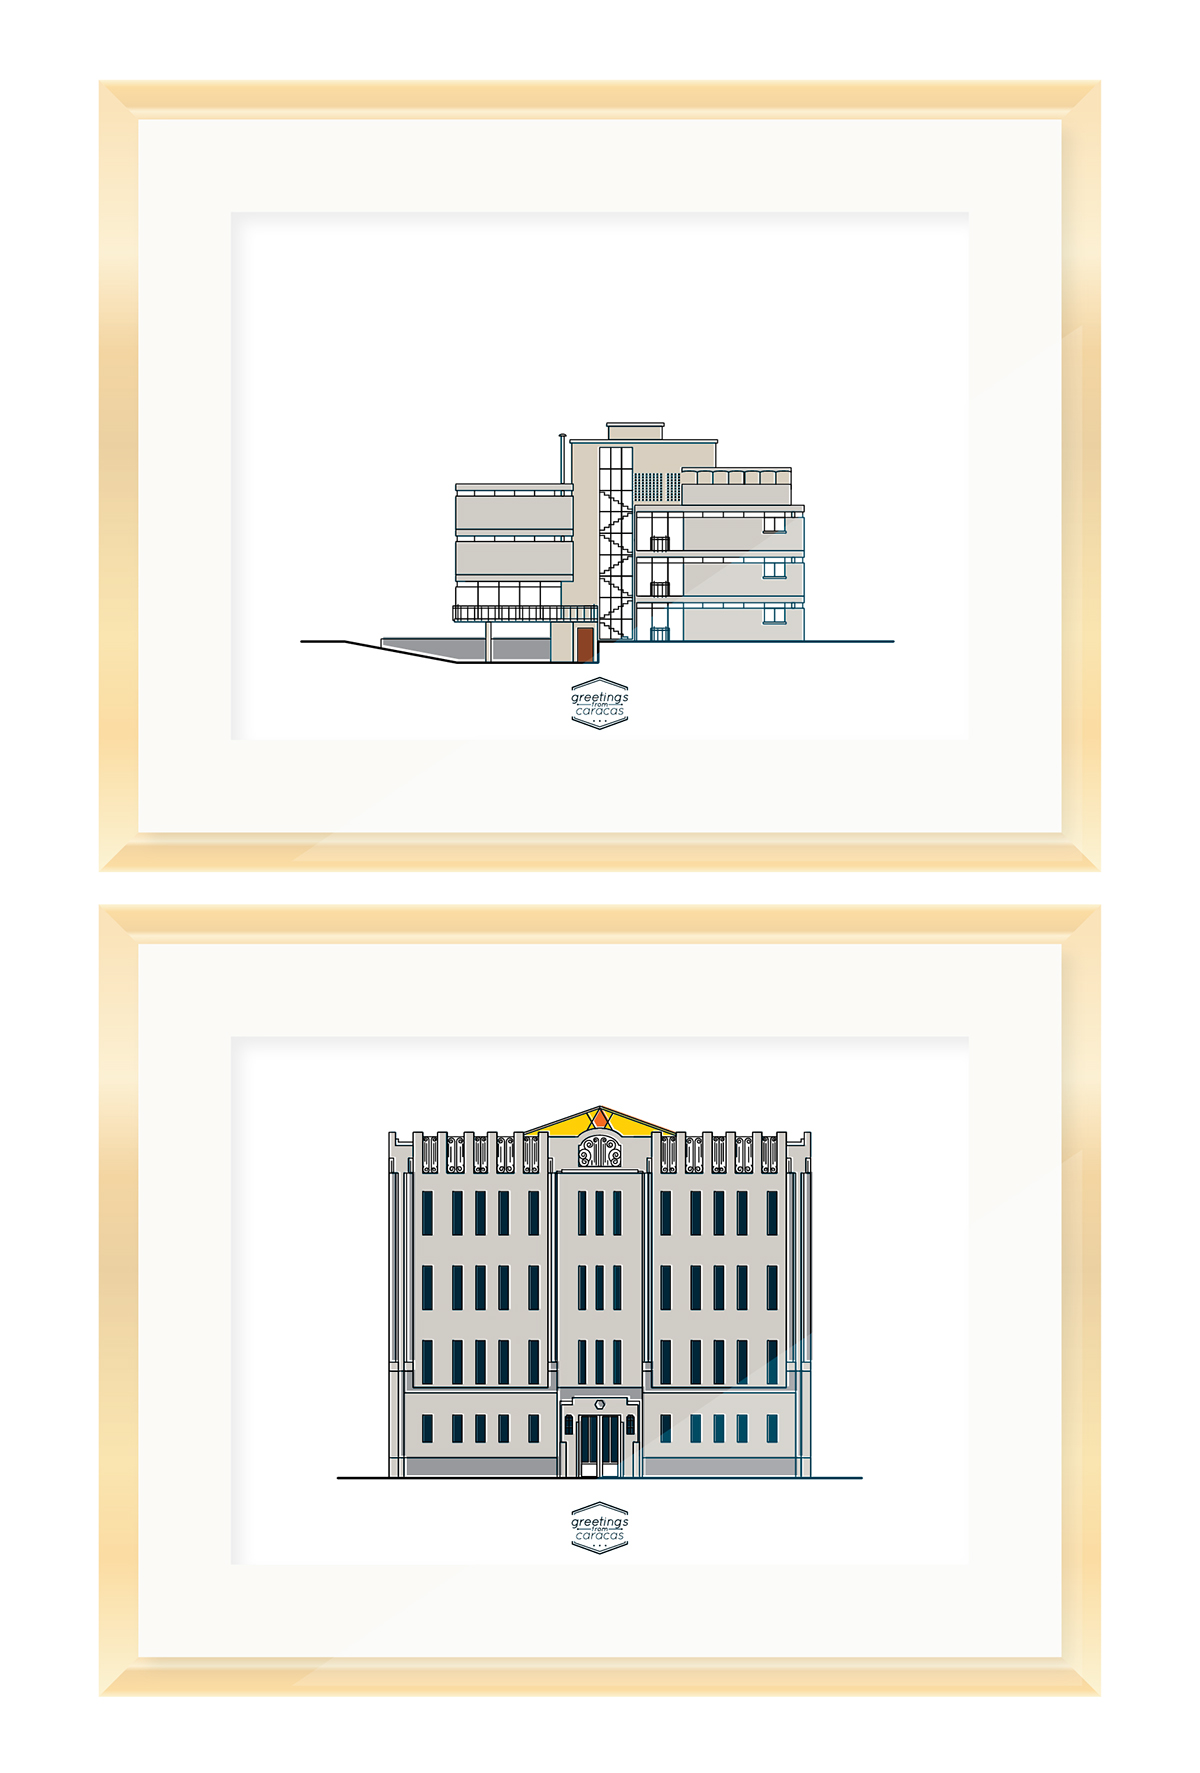 ilustration ilustracion caracas venezuela arquitectura 50´s modernismo icom Iconos modernism edificios buildings ciudad city